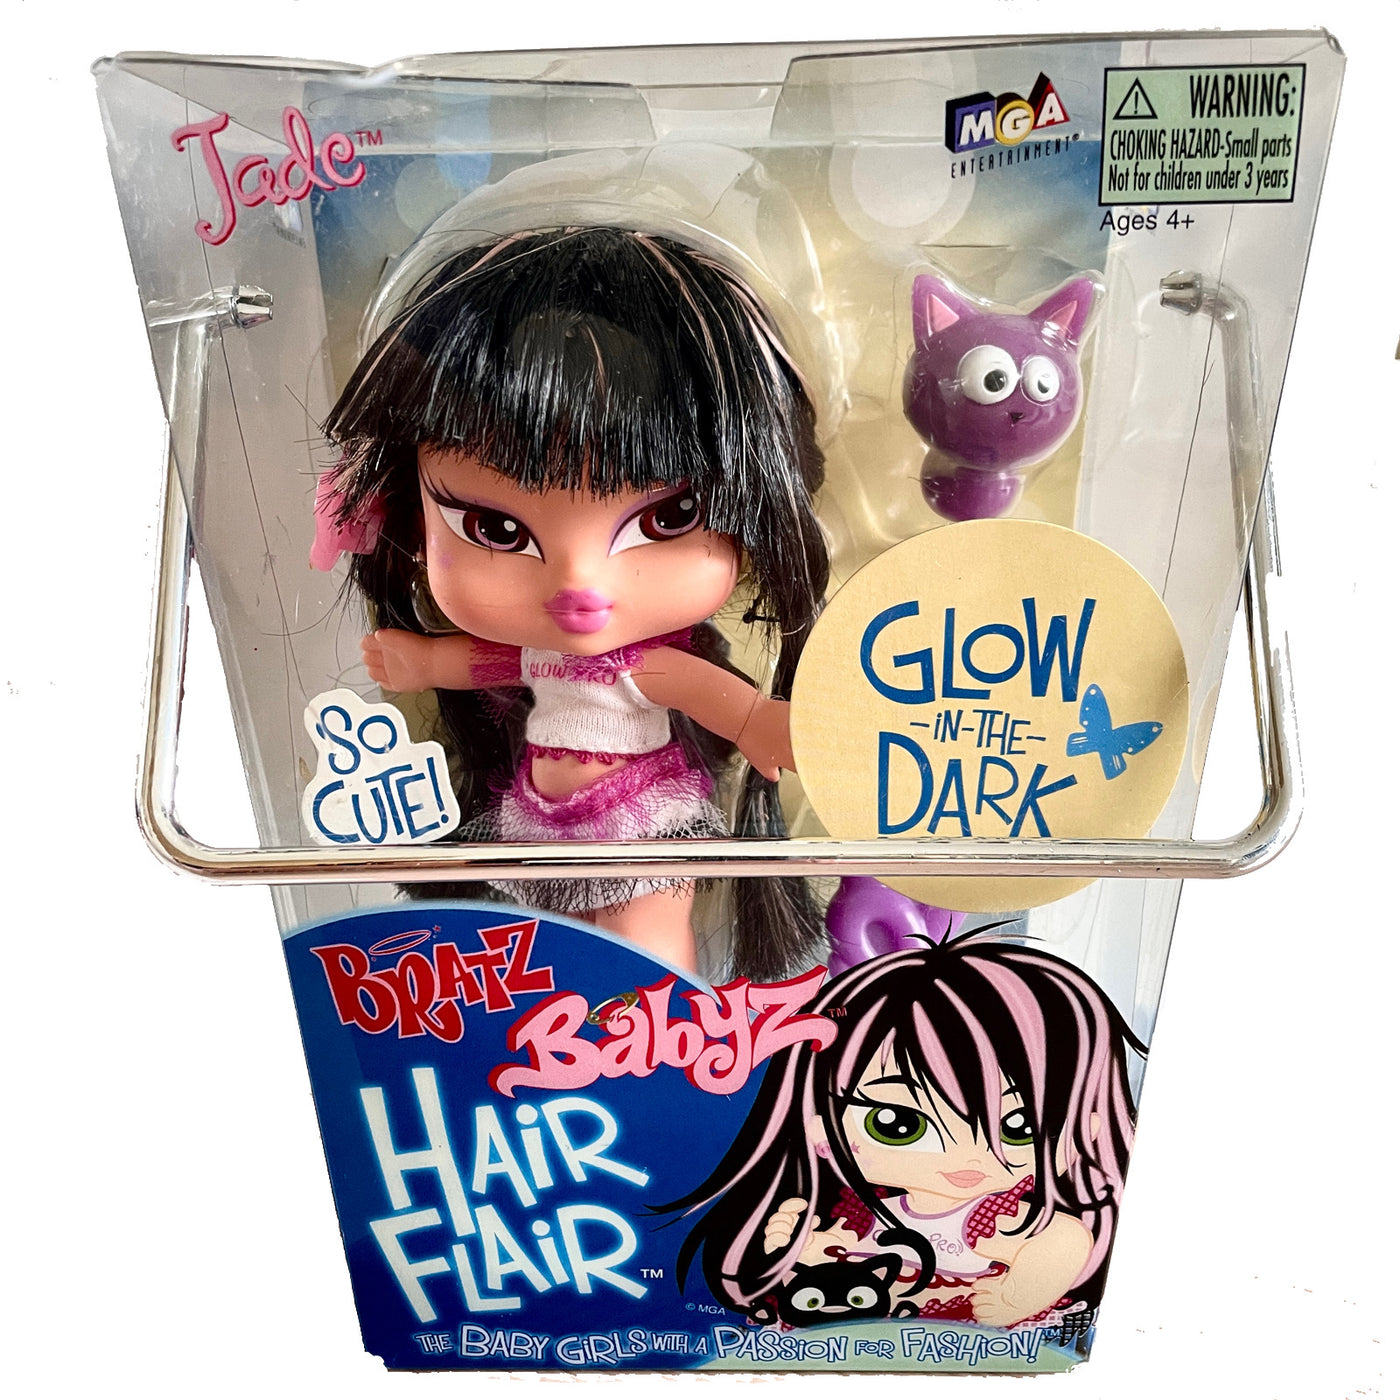 Bratz Babyz Doll Jade Glow In The Dark Hair Flair 4.5 with Pet